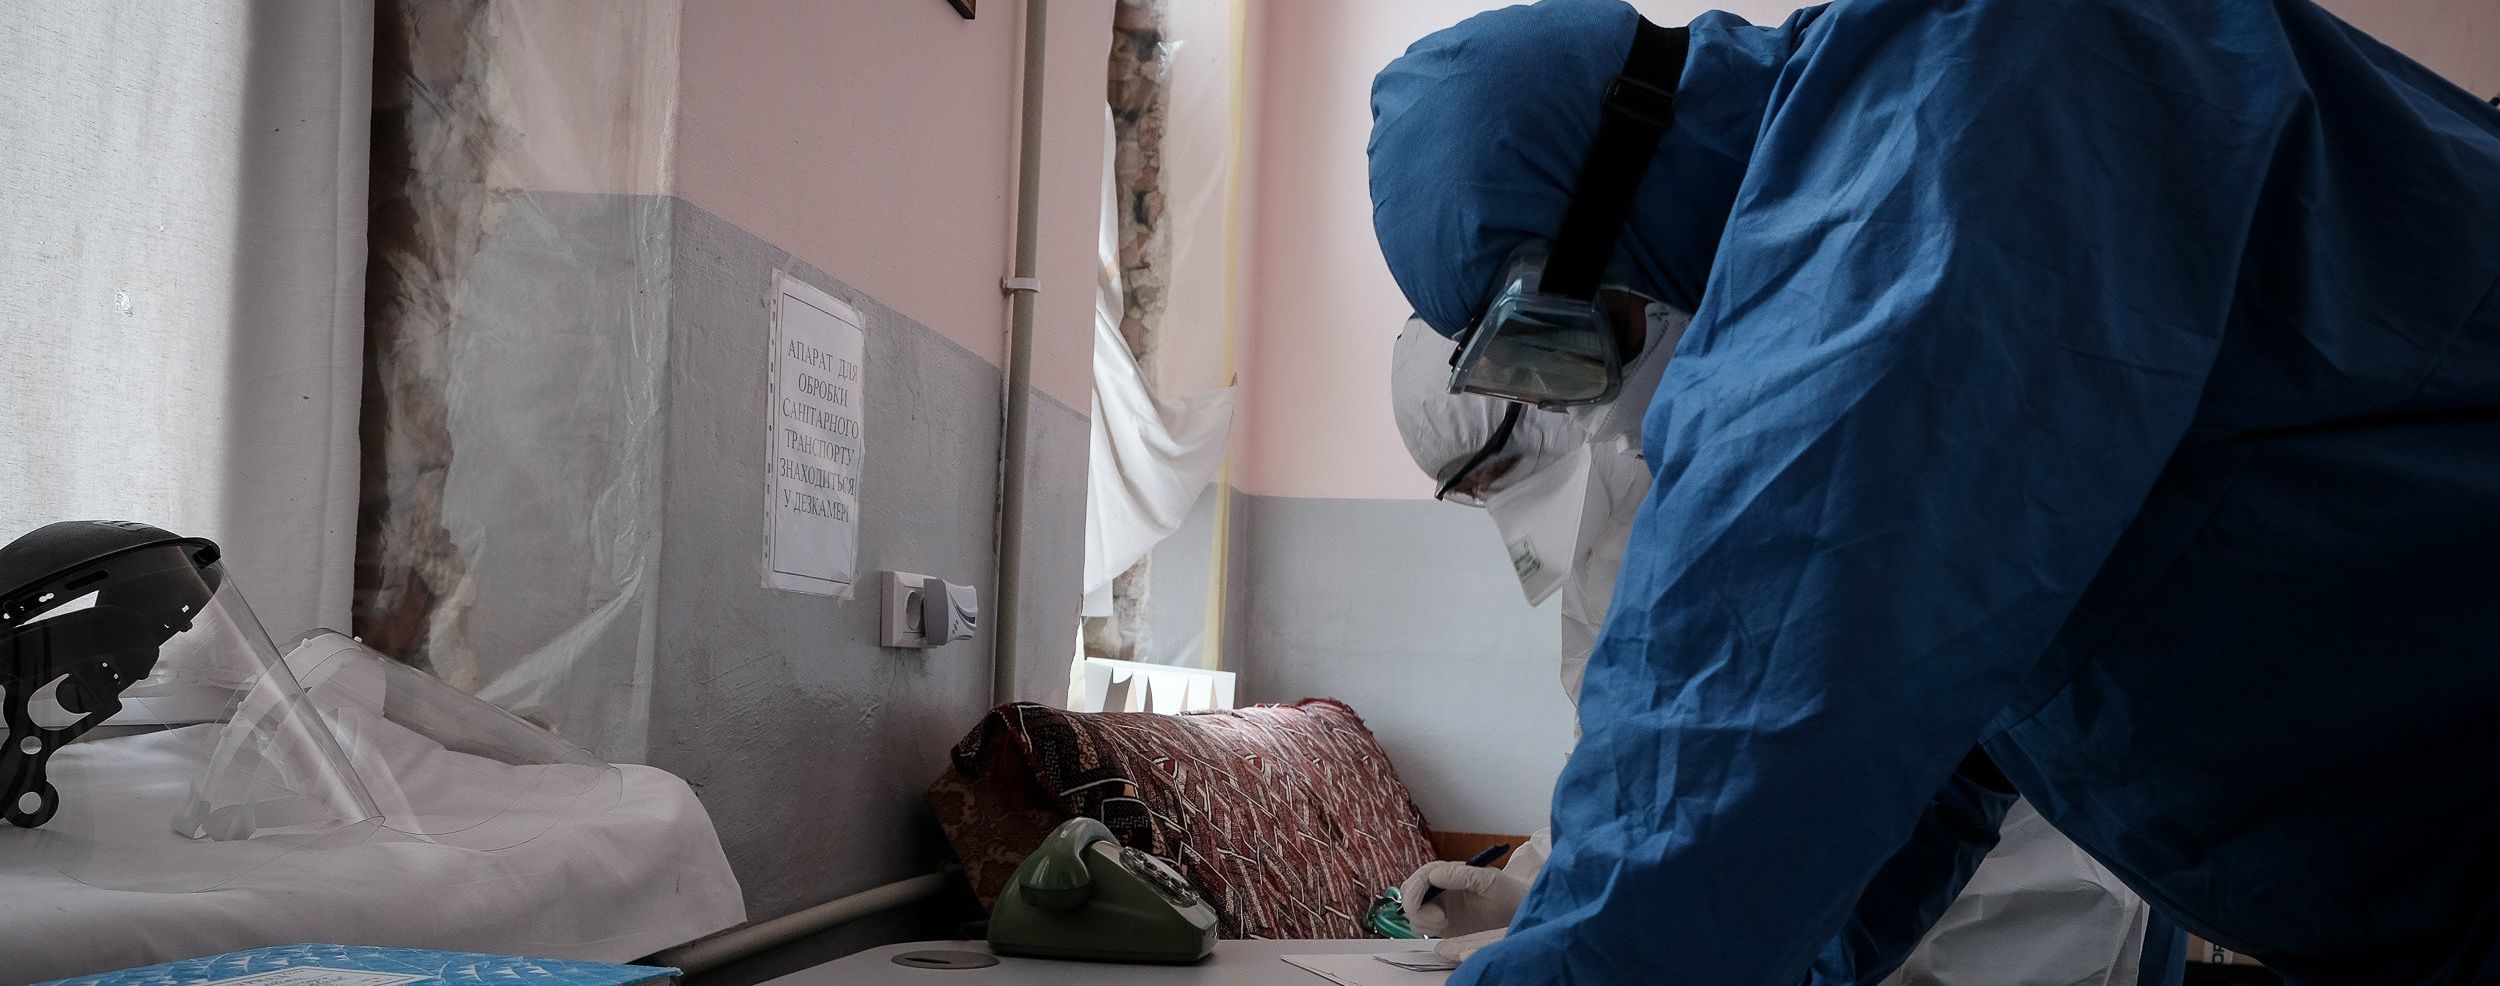 В Украине снова резко возросло количество новых случаев коронавируса: статистика Минздрава на 10 июня